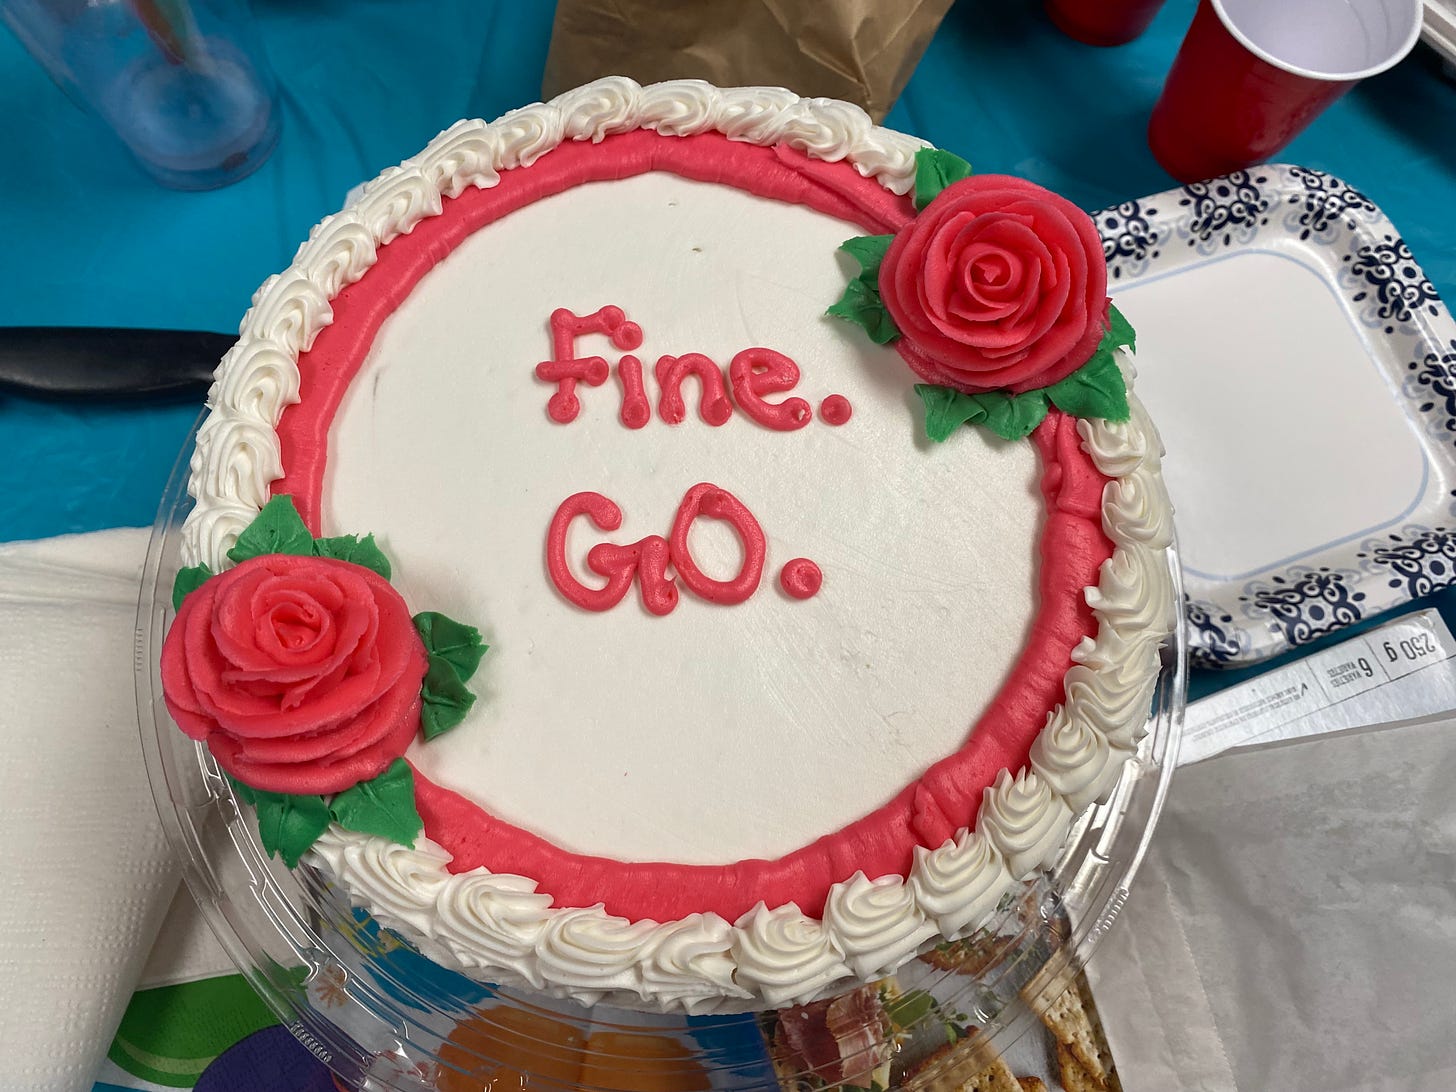 A white birthday cake with "Fine. GO." written on it.